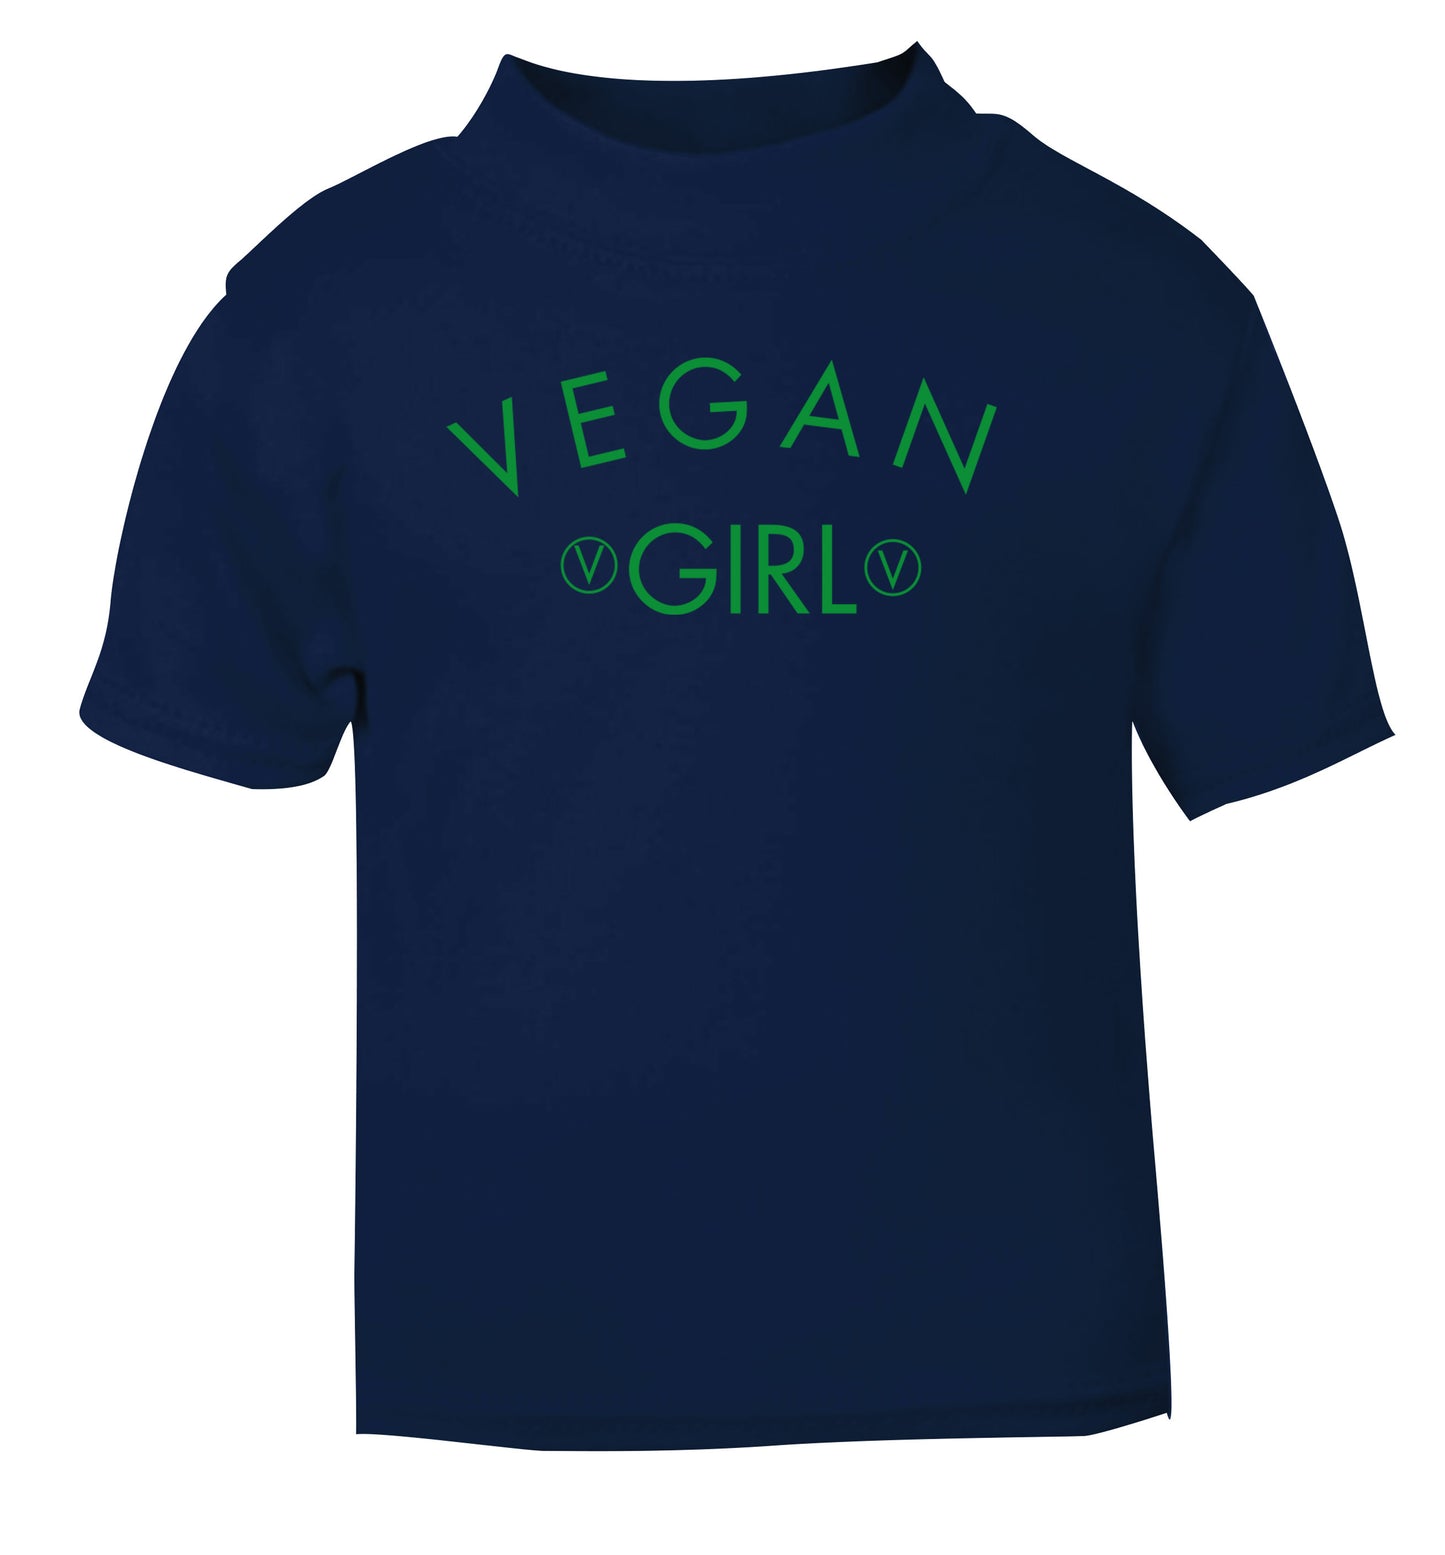 Vegan girl navy Baby Toddler Tshirt 2 Years